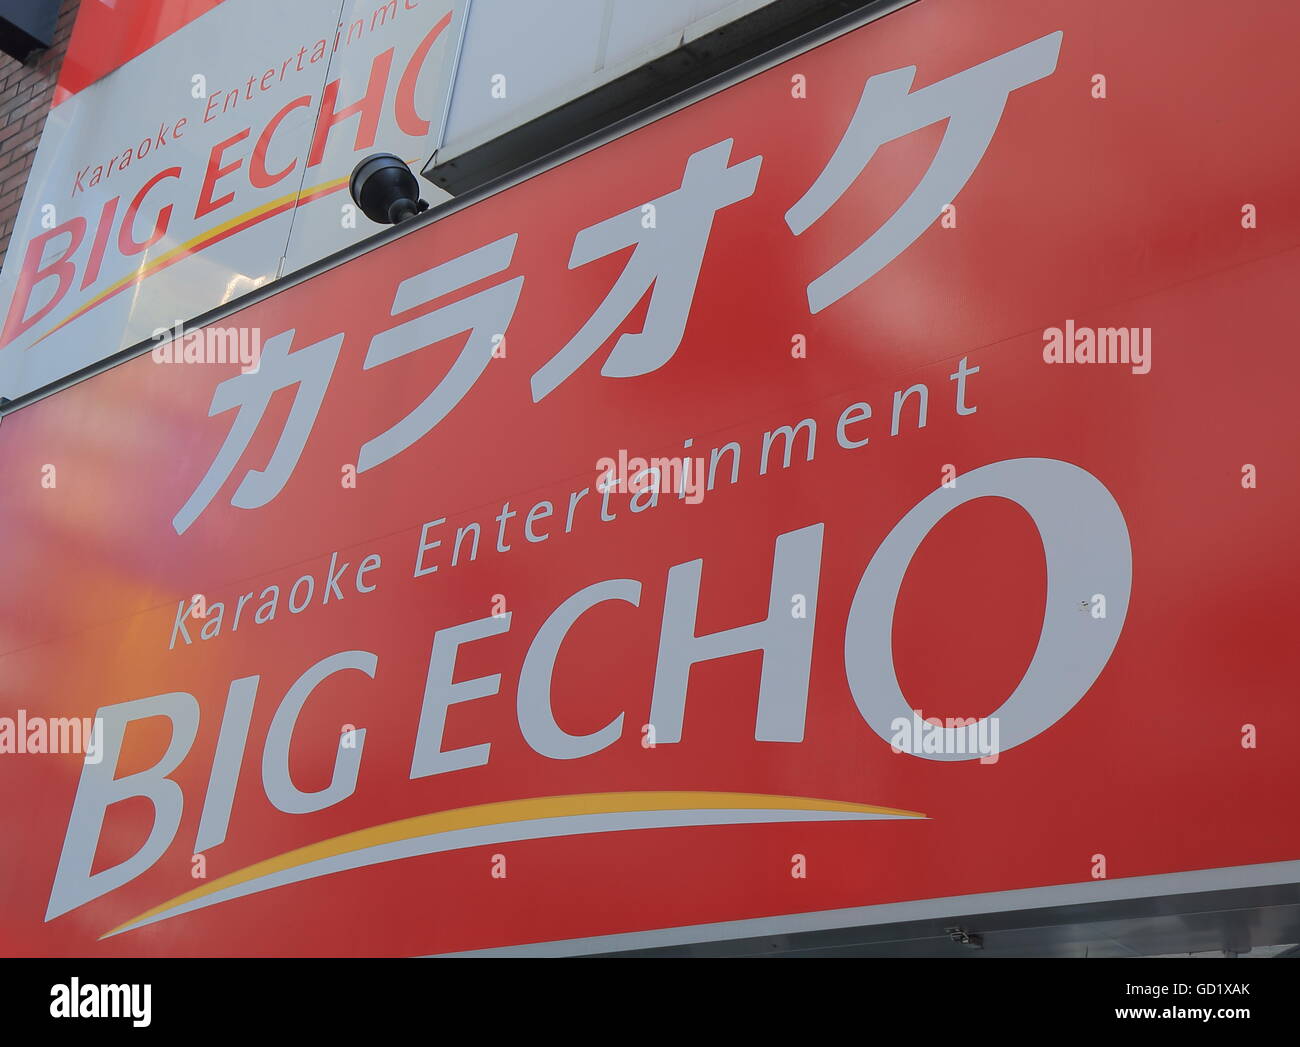 Japanese Karaoke Big Echo. One of the largest Karaoke box chain in Japan. Stock Photo